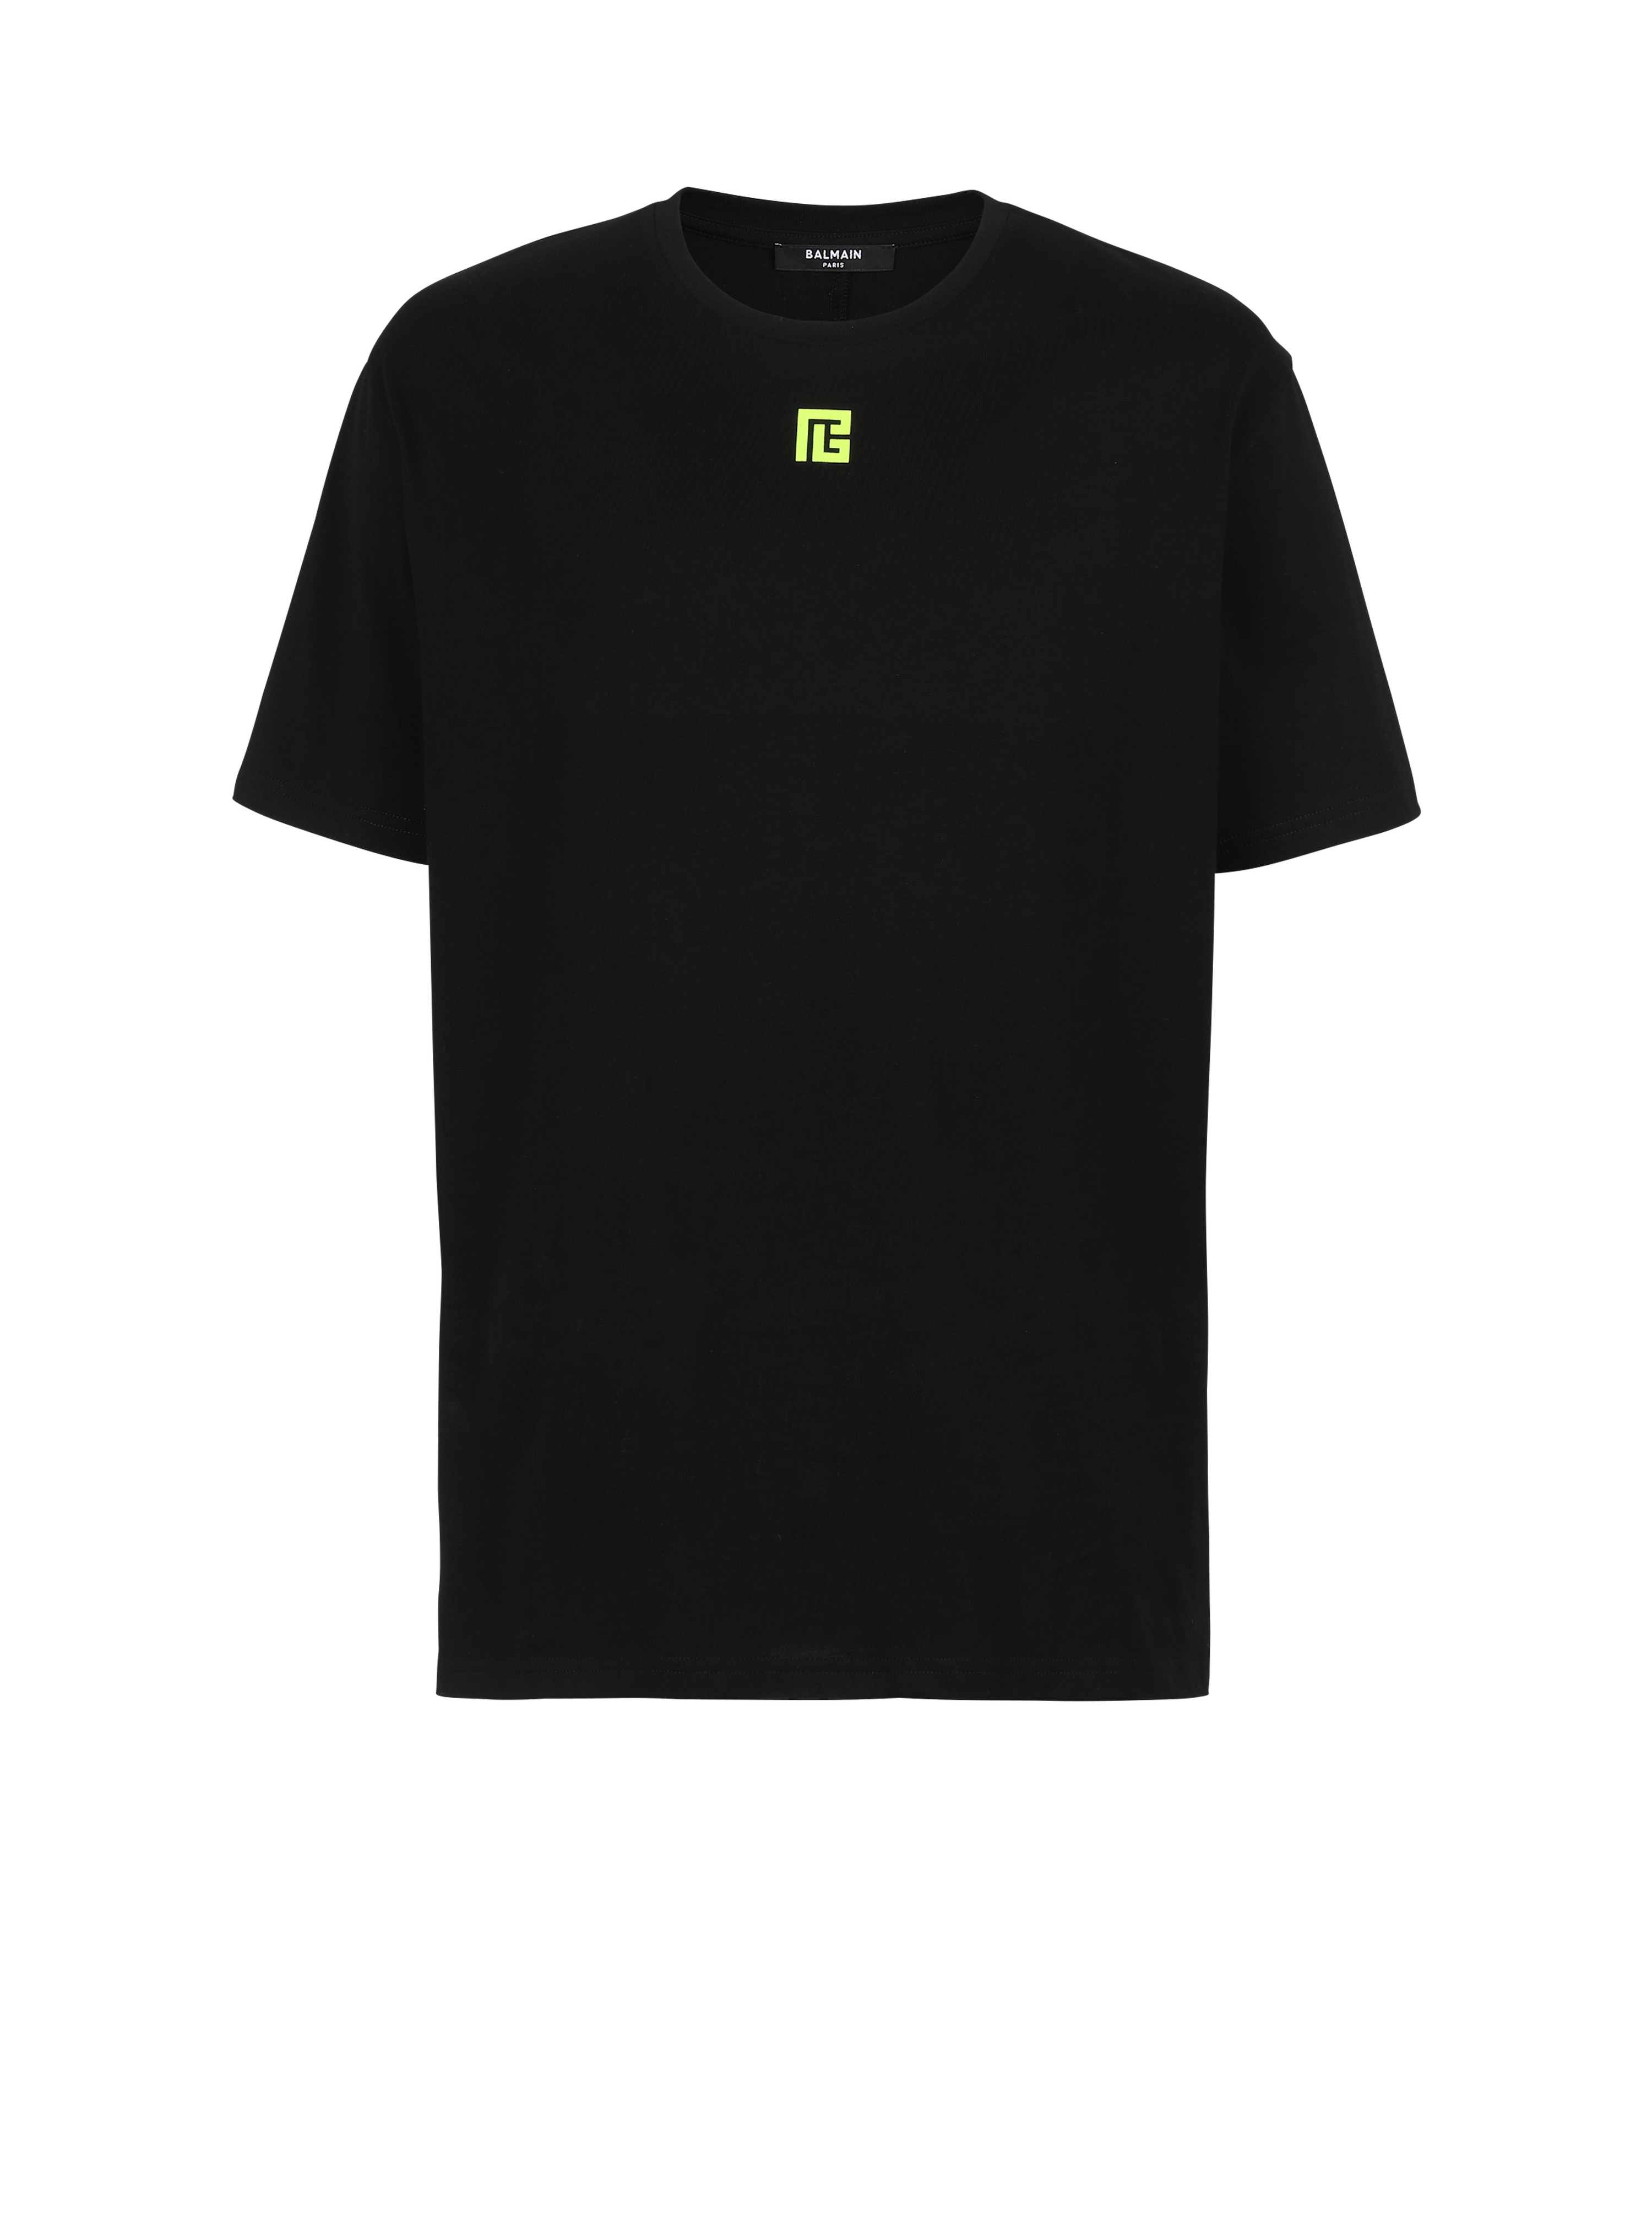 Cotton T-shirt with maxi Balmain logo print on back, black